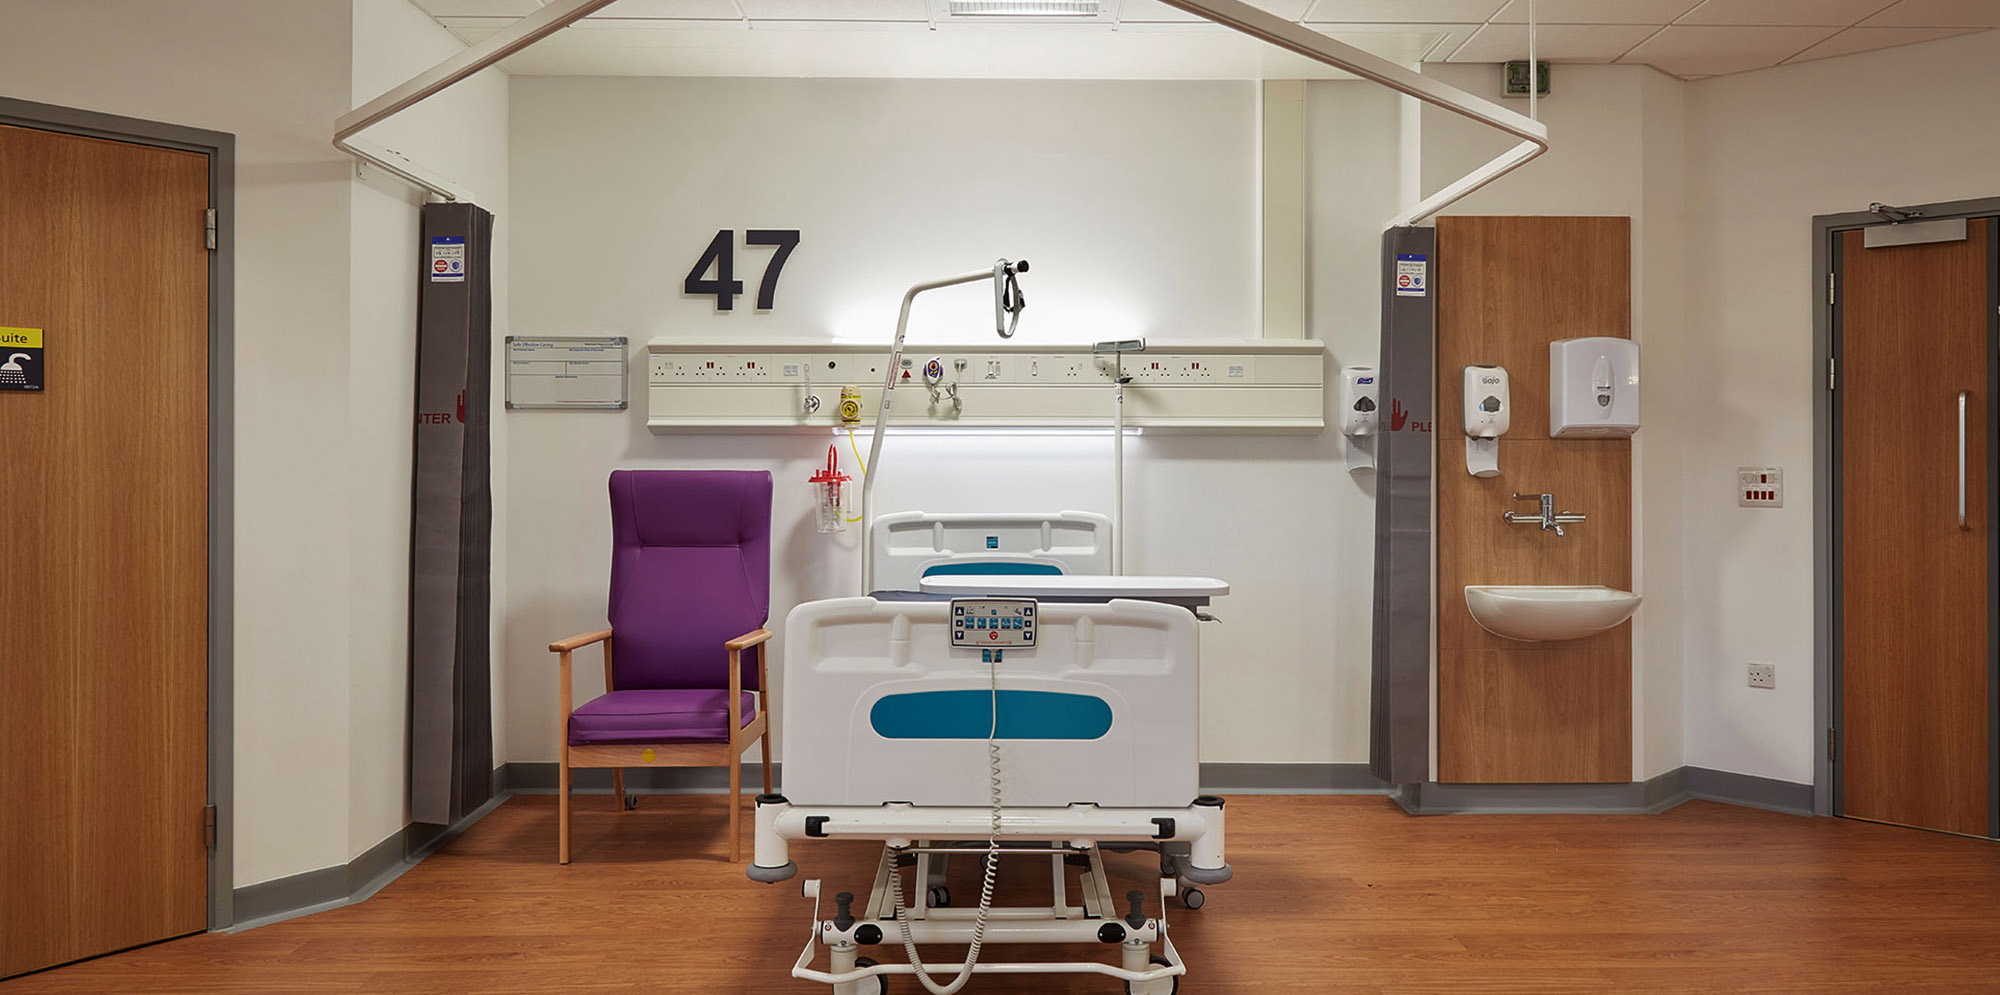 Wrightington Hospital patient room